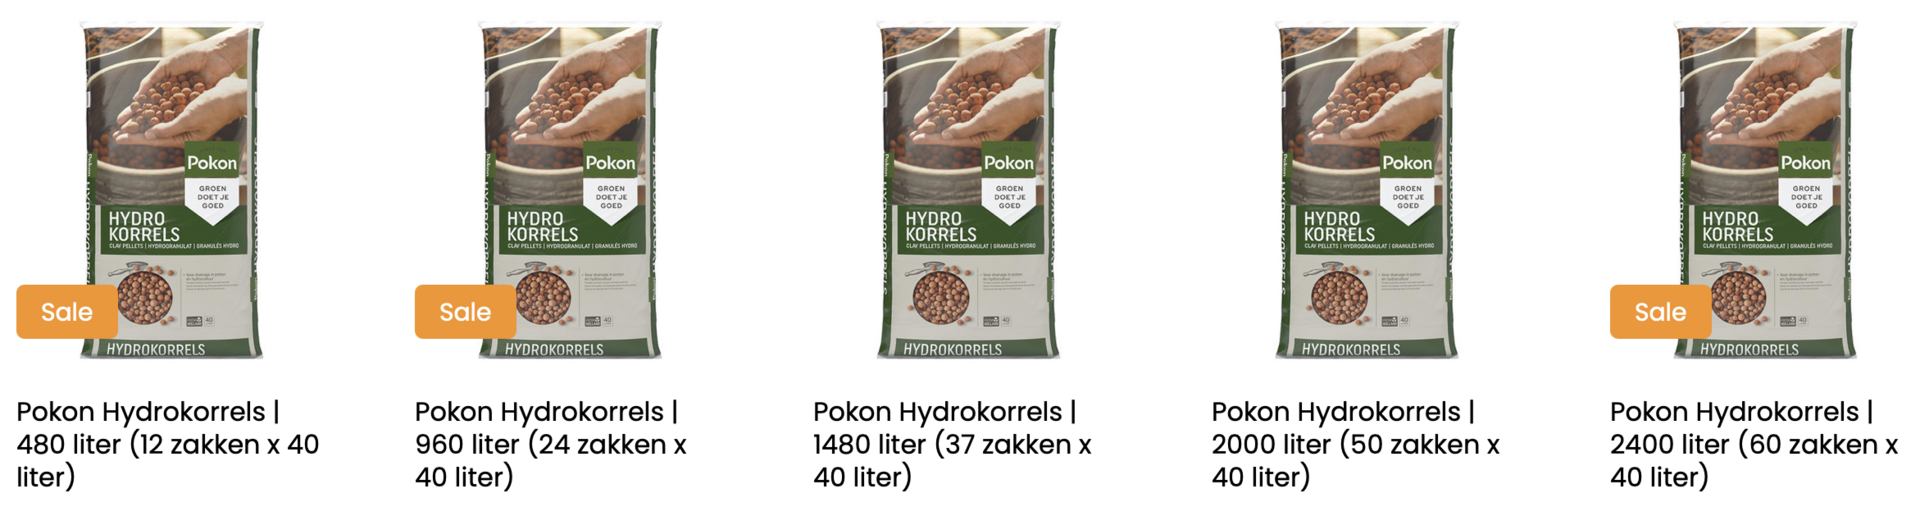 pokon-hydrokorrels